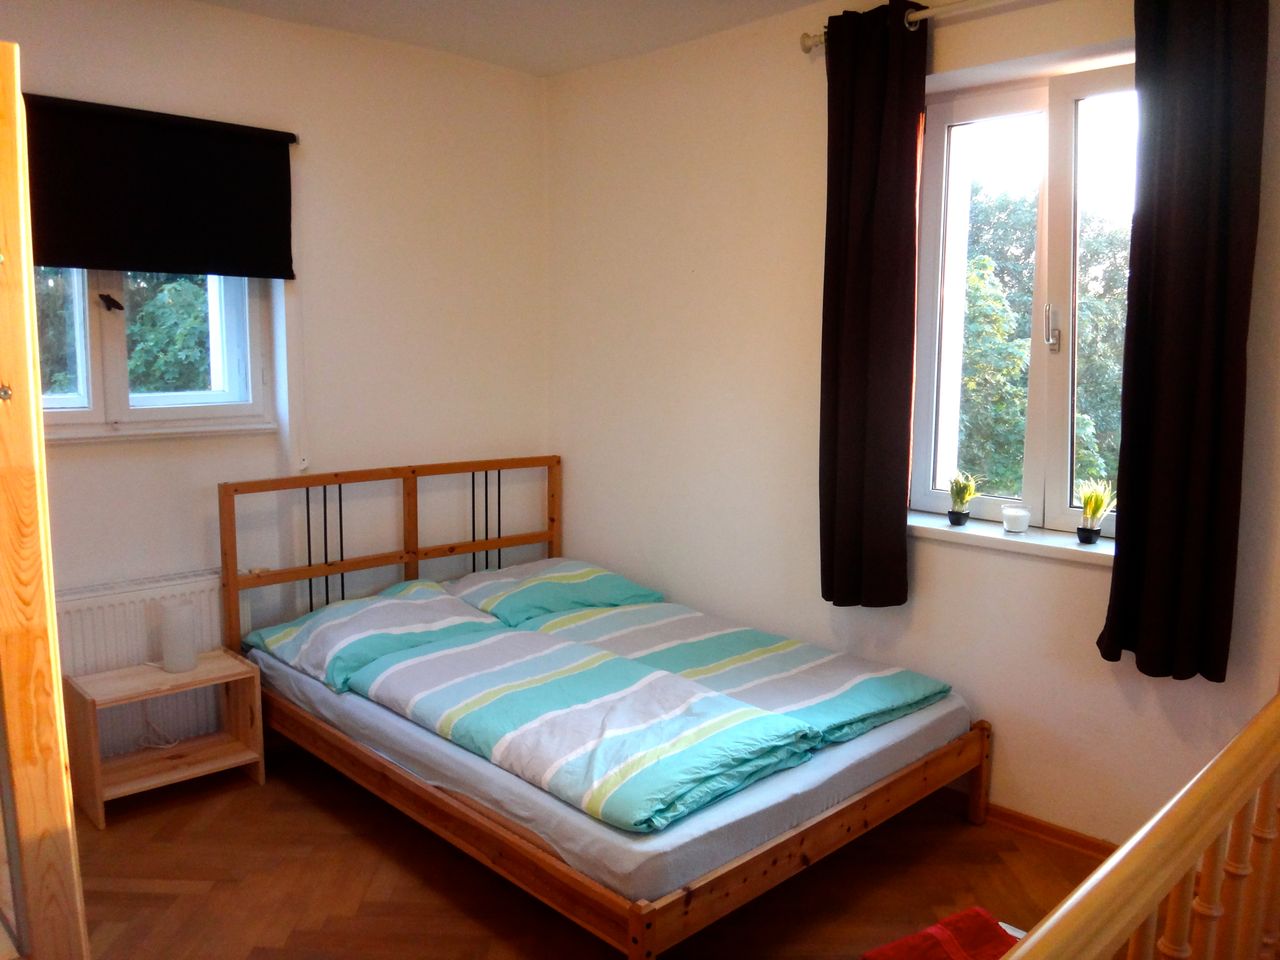 Modern, beautiful duplex suite in Zehlendorf